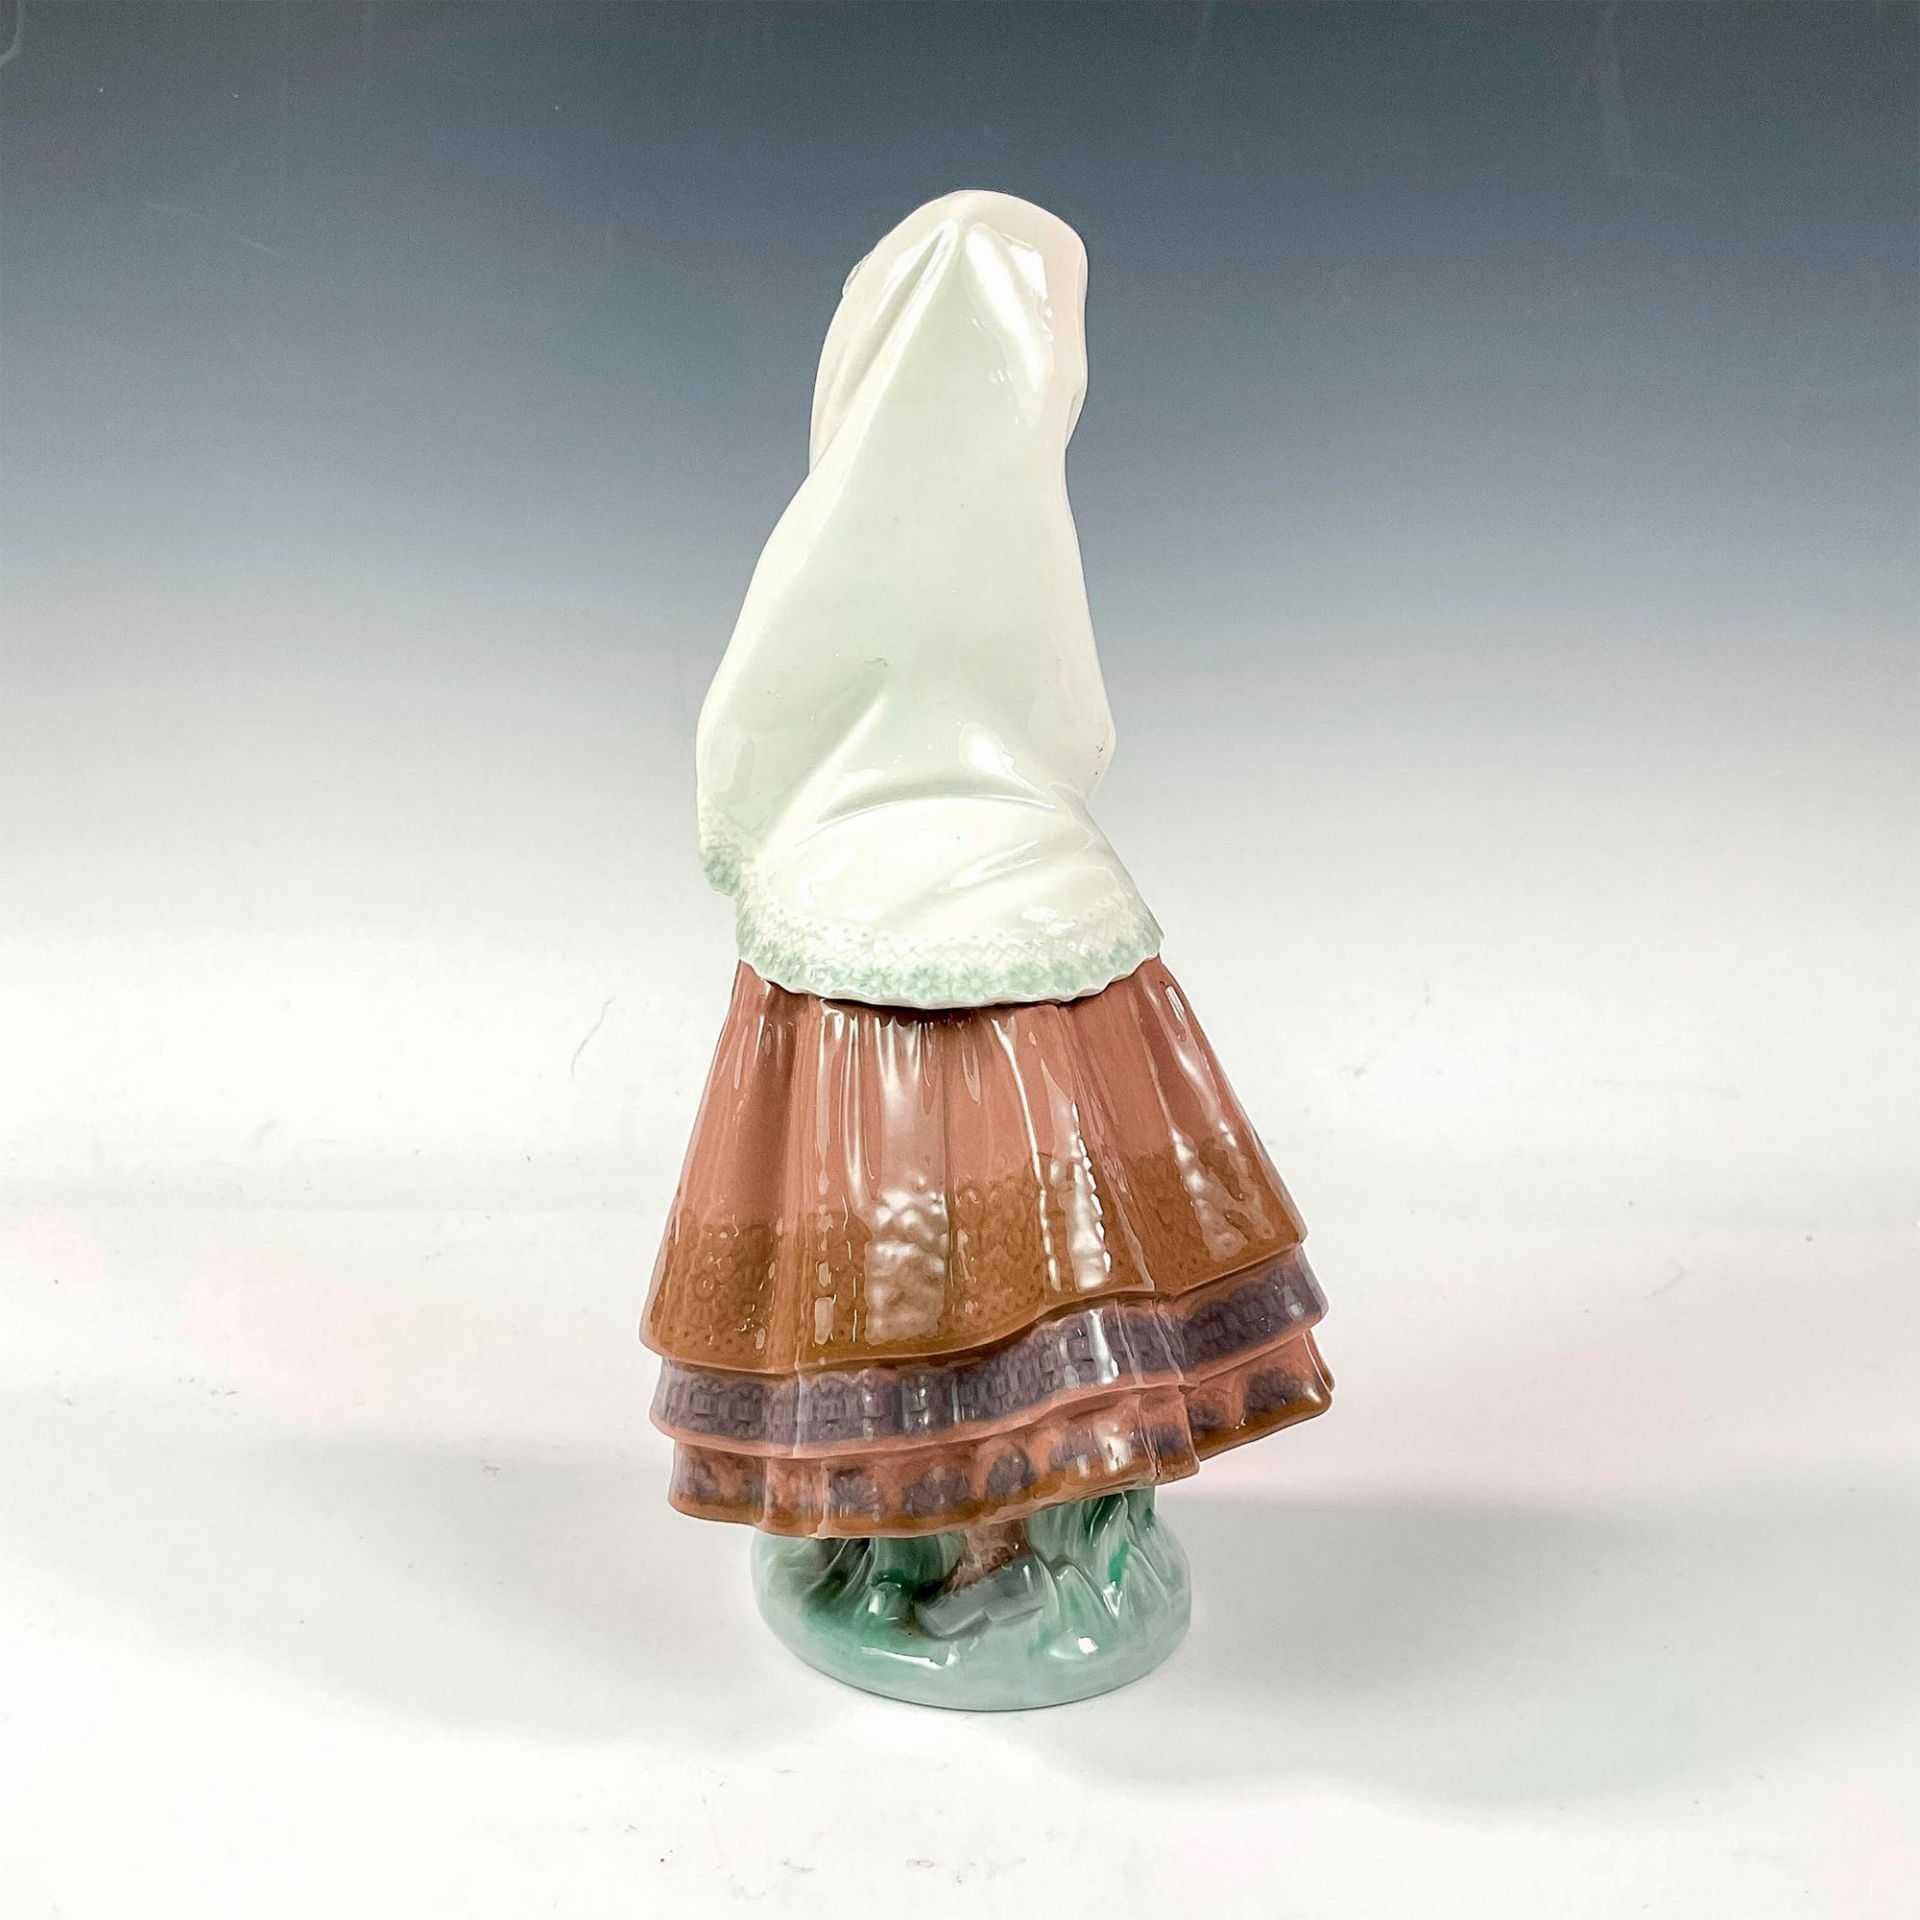 Festival Time 1005053 - Lladro Porcelain Figurine - Image 2 of 3